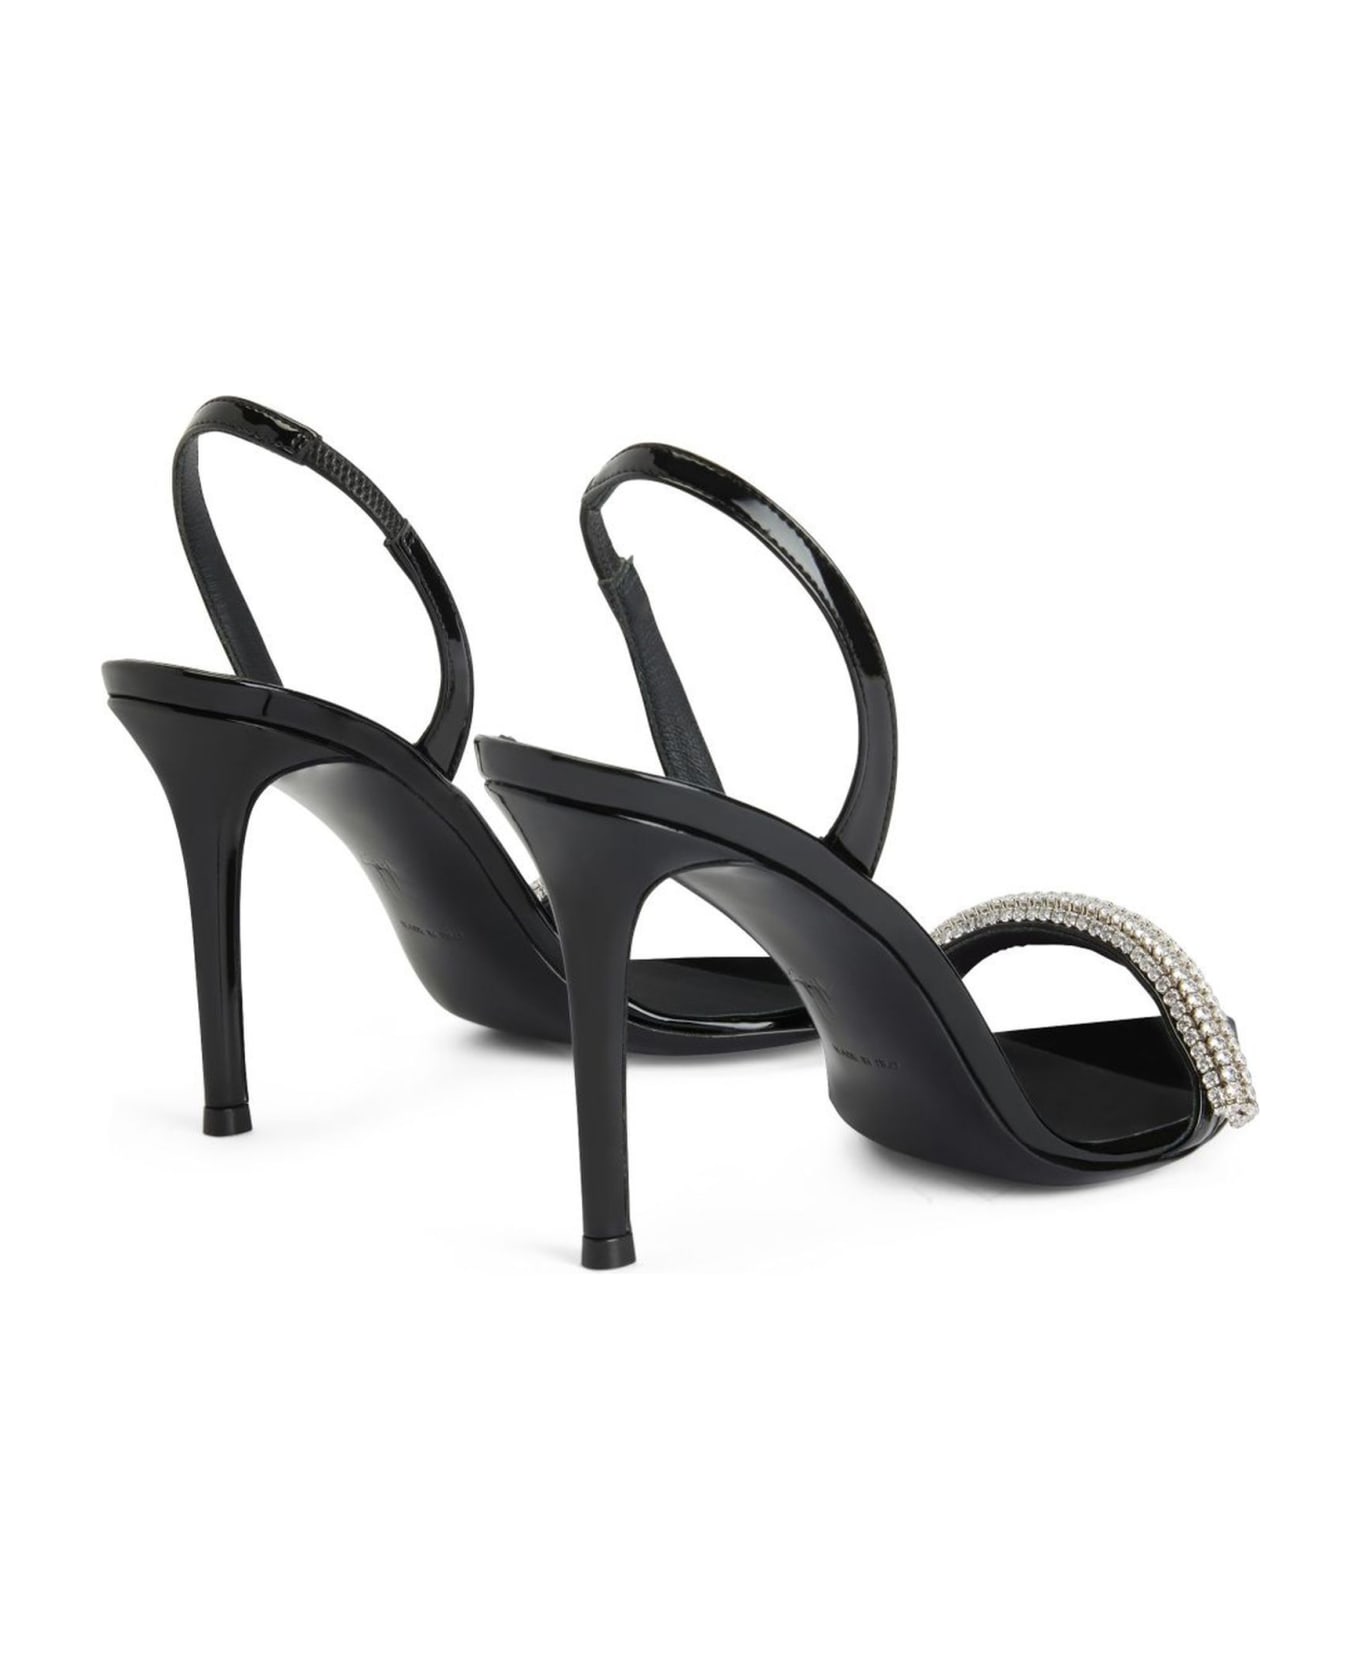 Giuseppe Zanotti Black Patent Leather Slingback Sandals - Black